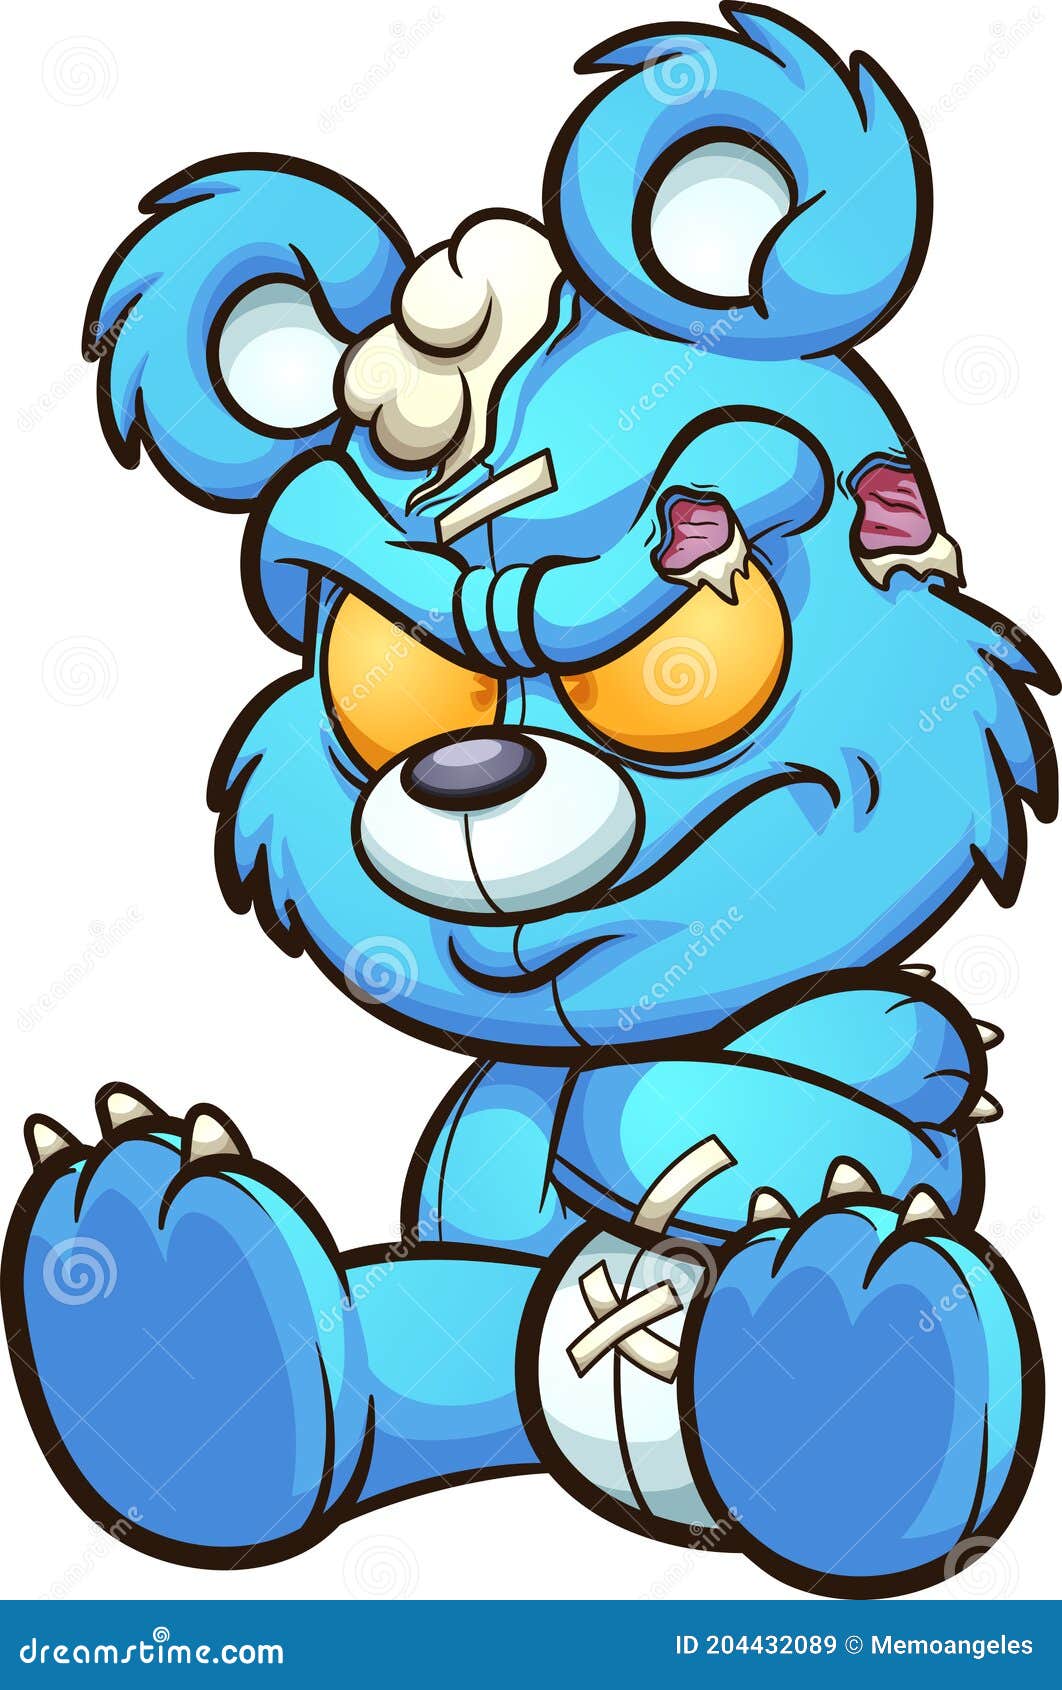 Angry Cartoon Blue Teddy Bear Pouting Stock Vector - Illustration of blue,  bear: 204432089